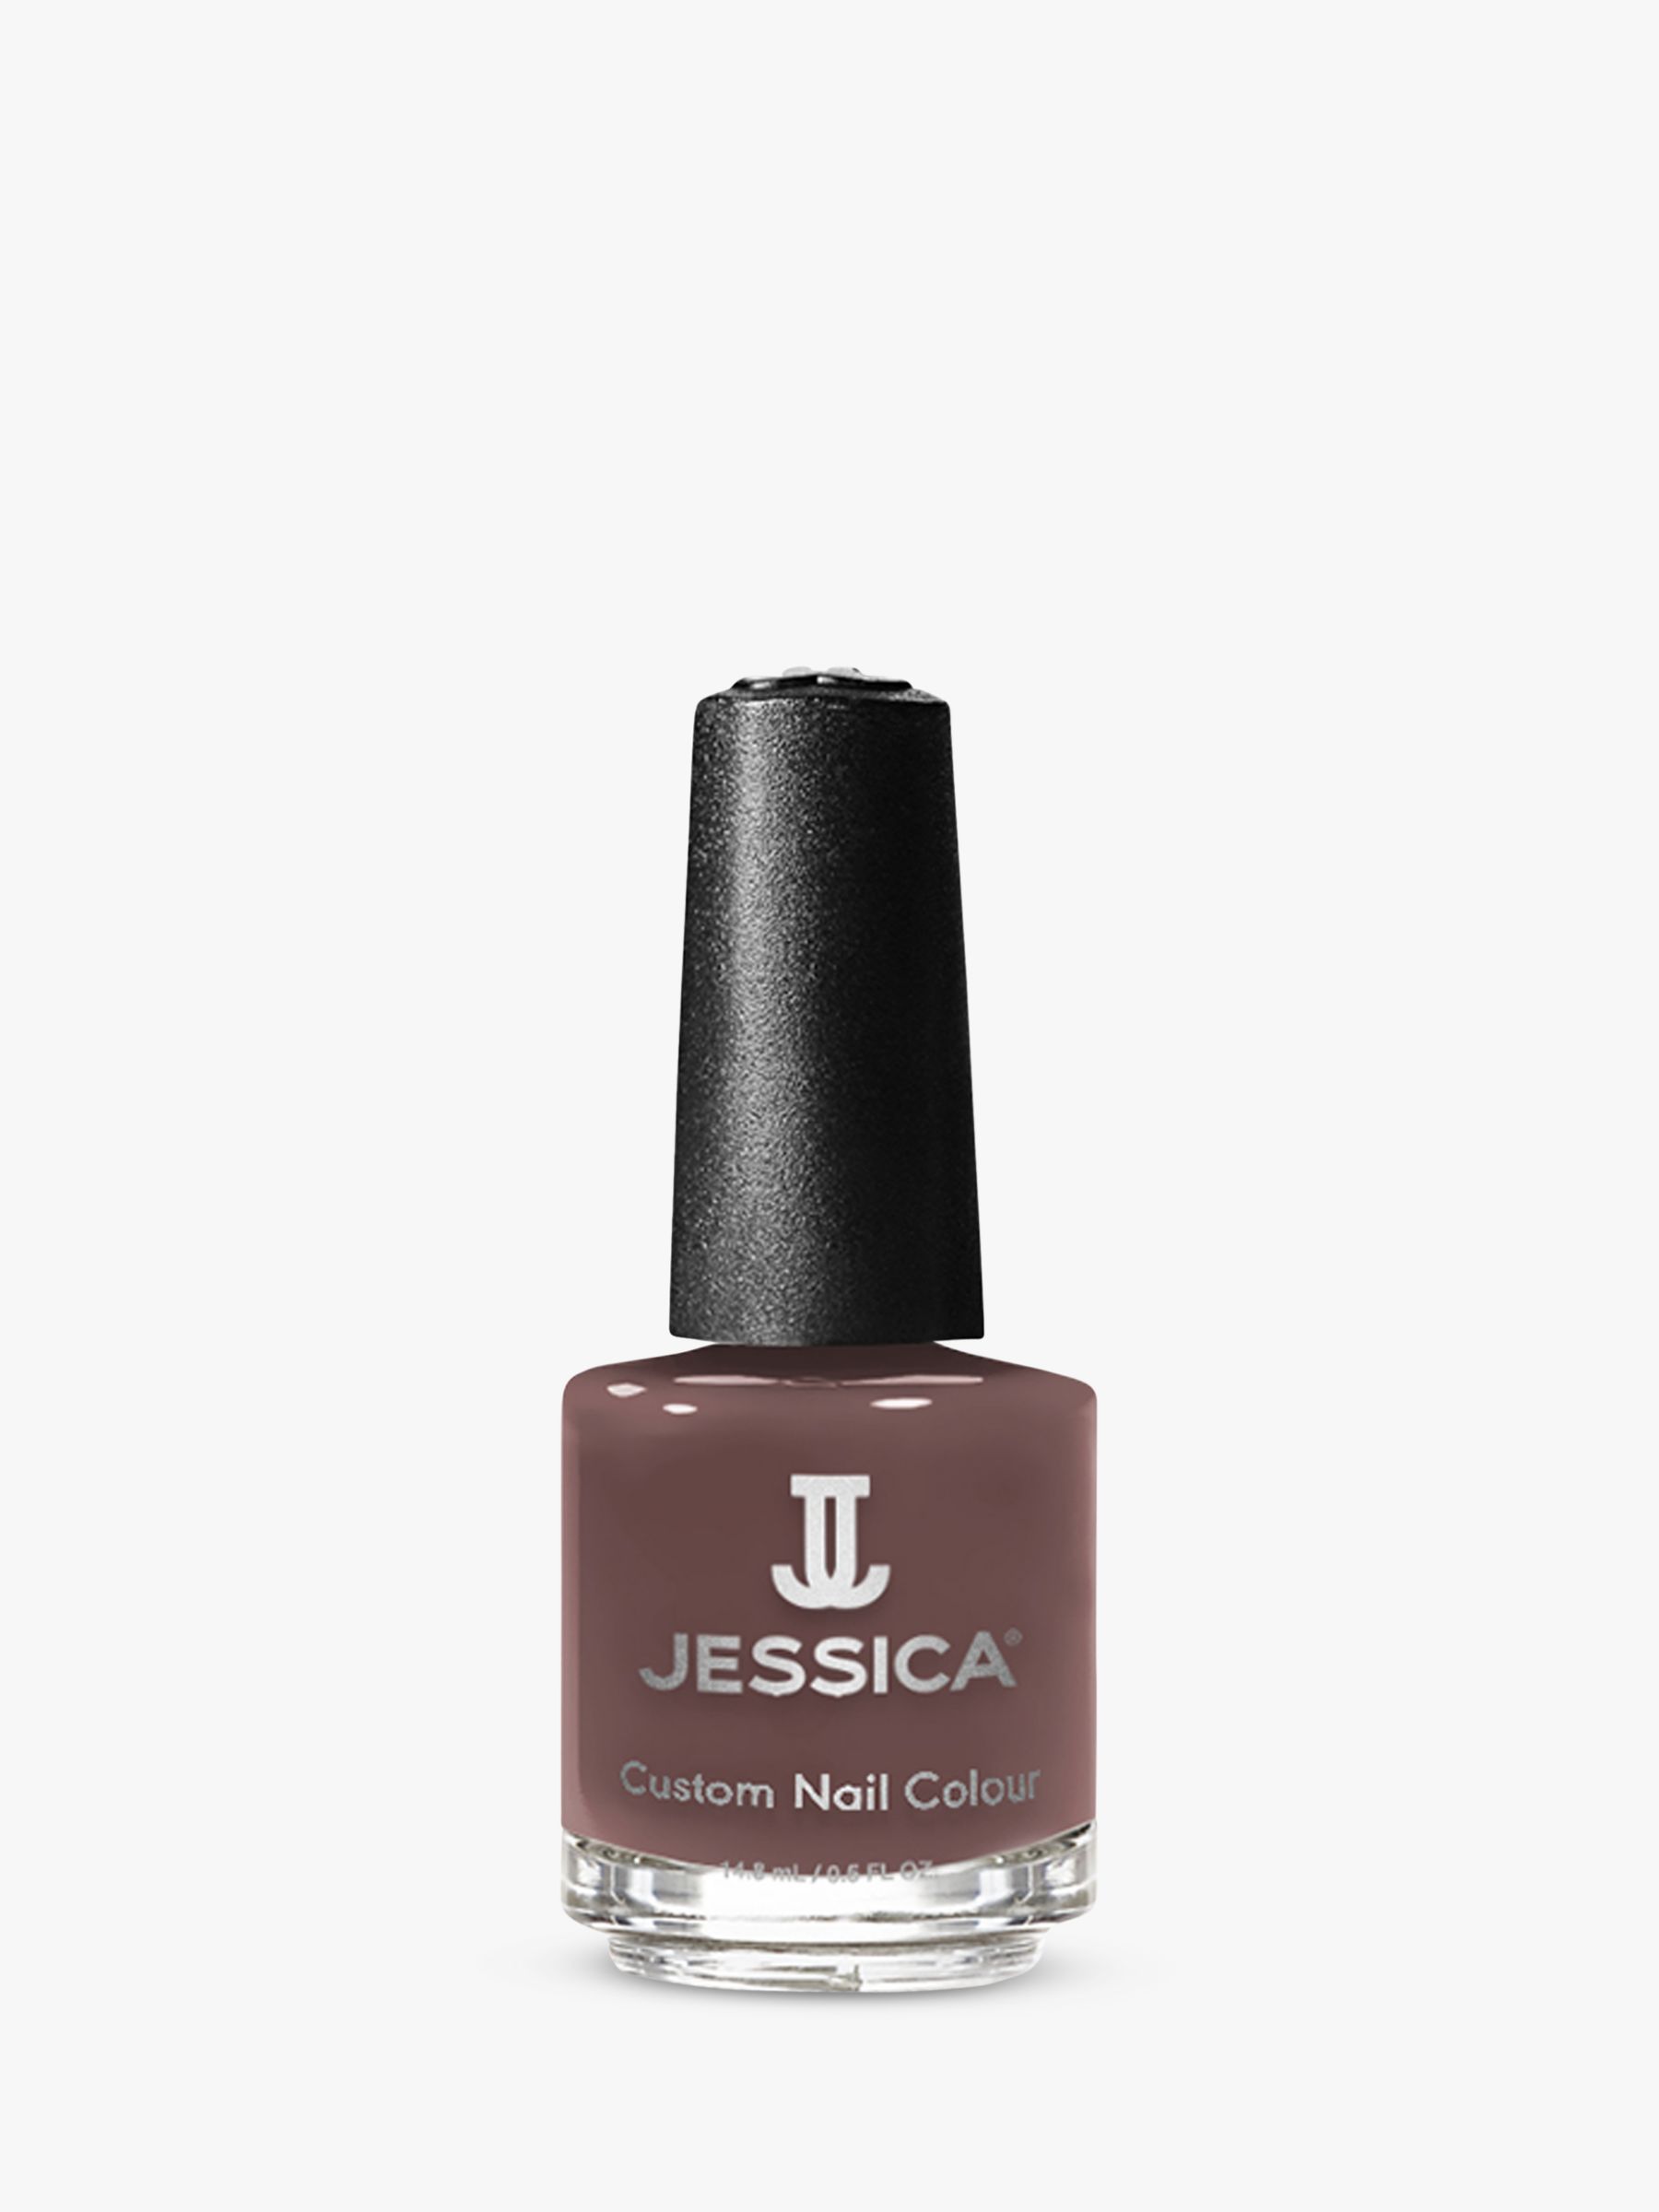 Jessica Custom Nail Colour - Darks and Greys